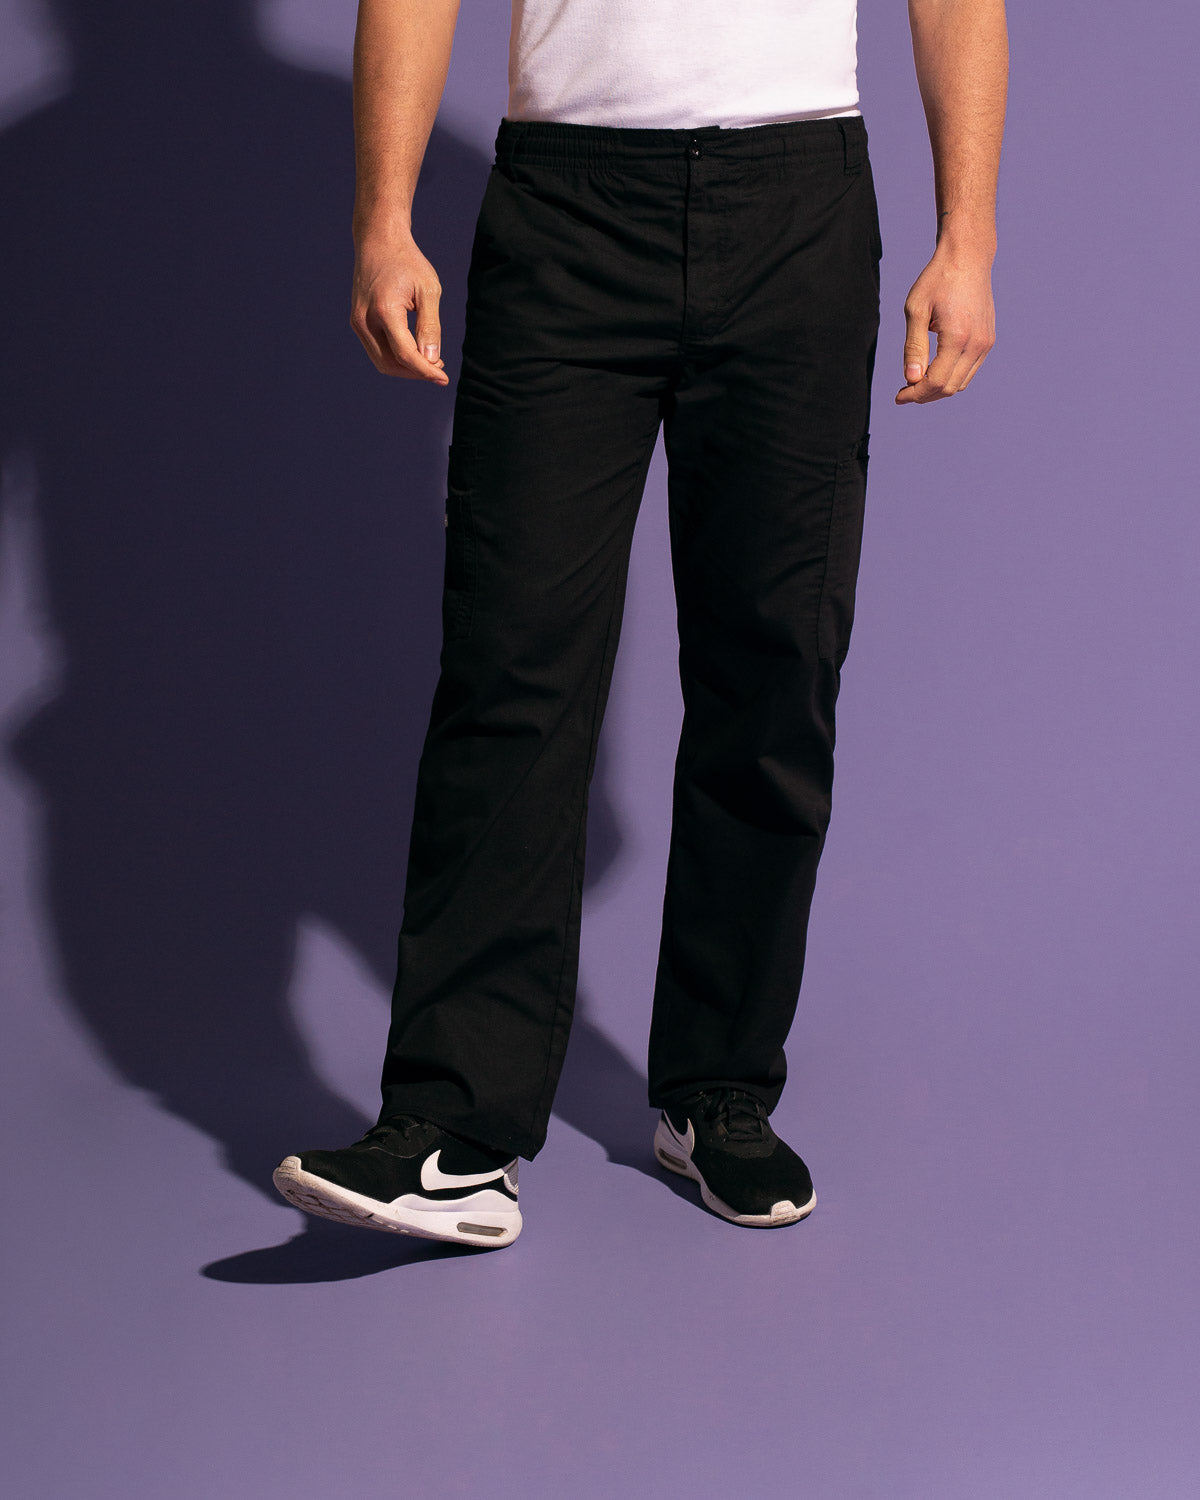 Pantalón Hombre | Uniformes Clínicos | Scorpi Basics